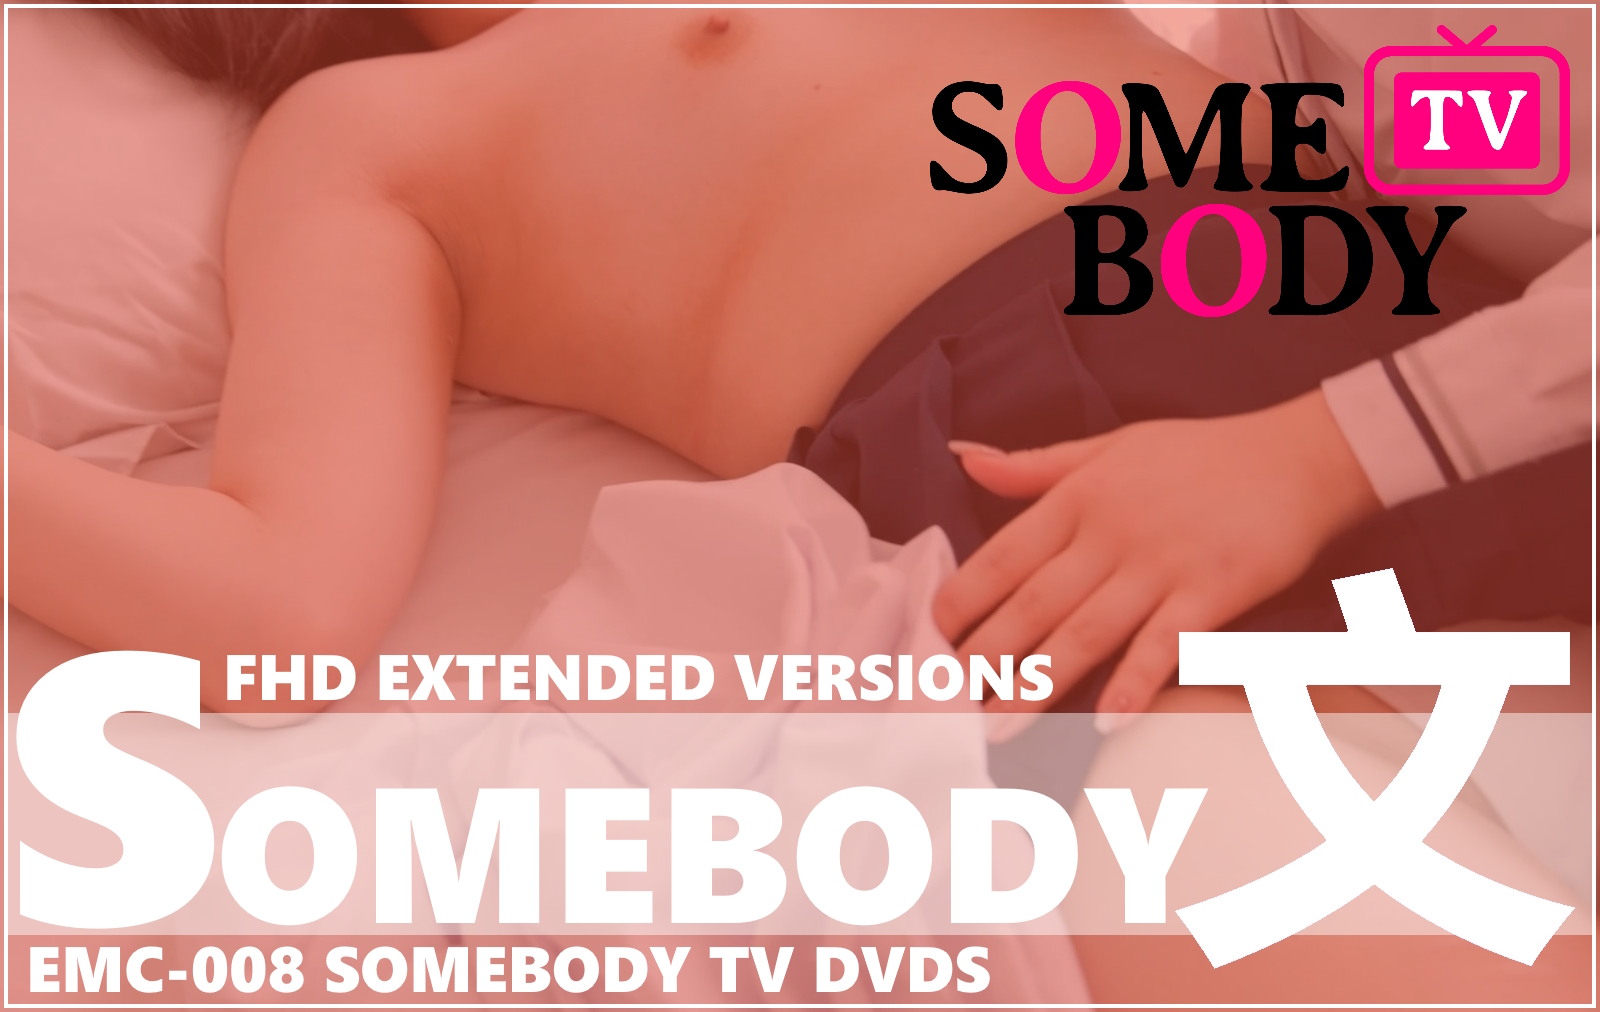 EMC-008 Somebody TV Limited Extended DVDs